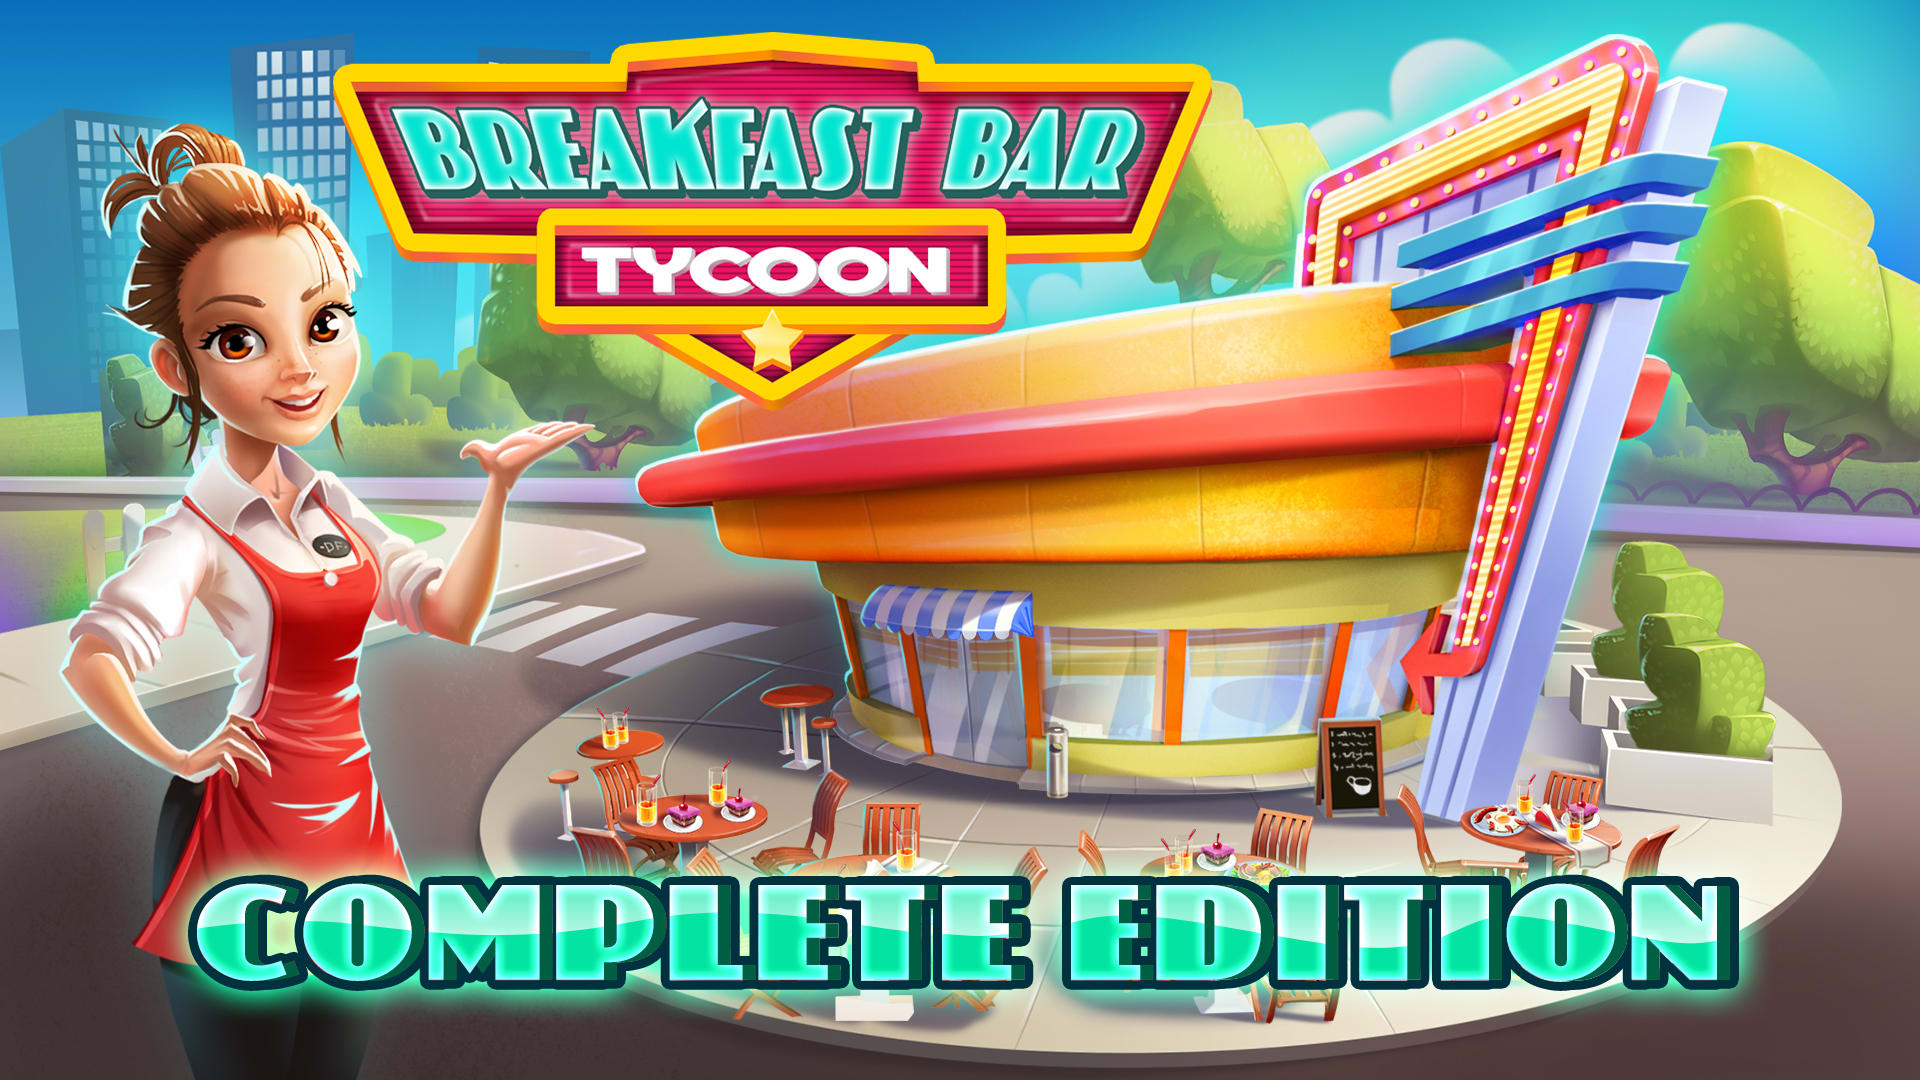 Breakfast Bar Tycoon Complete Edition